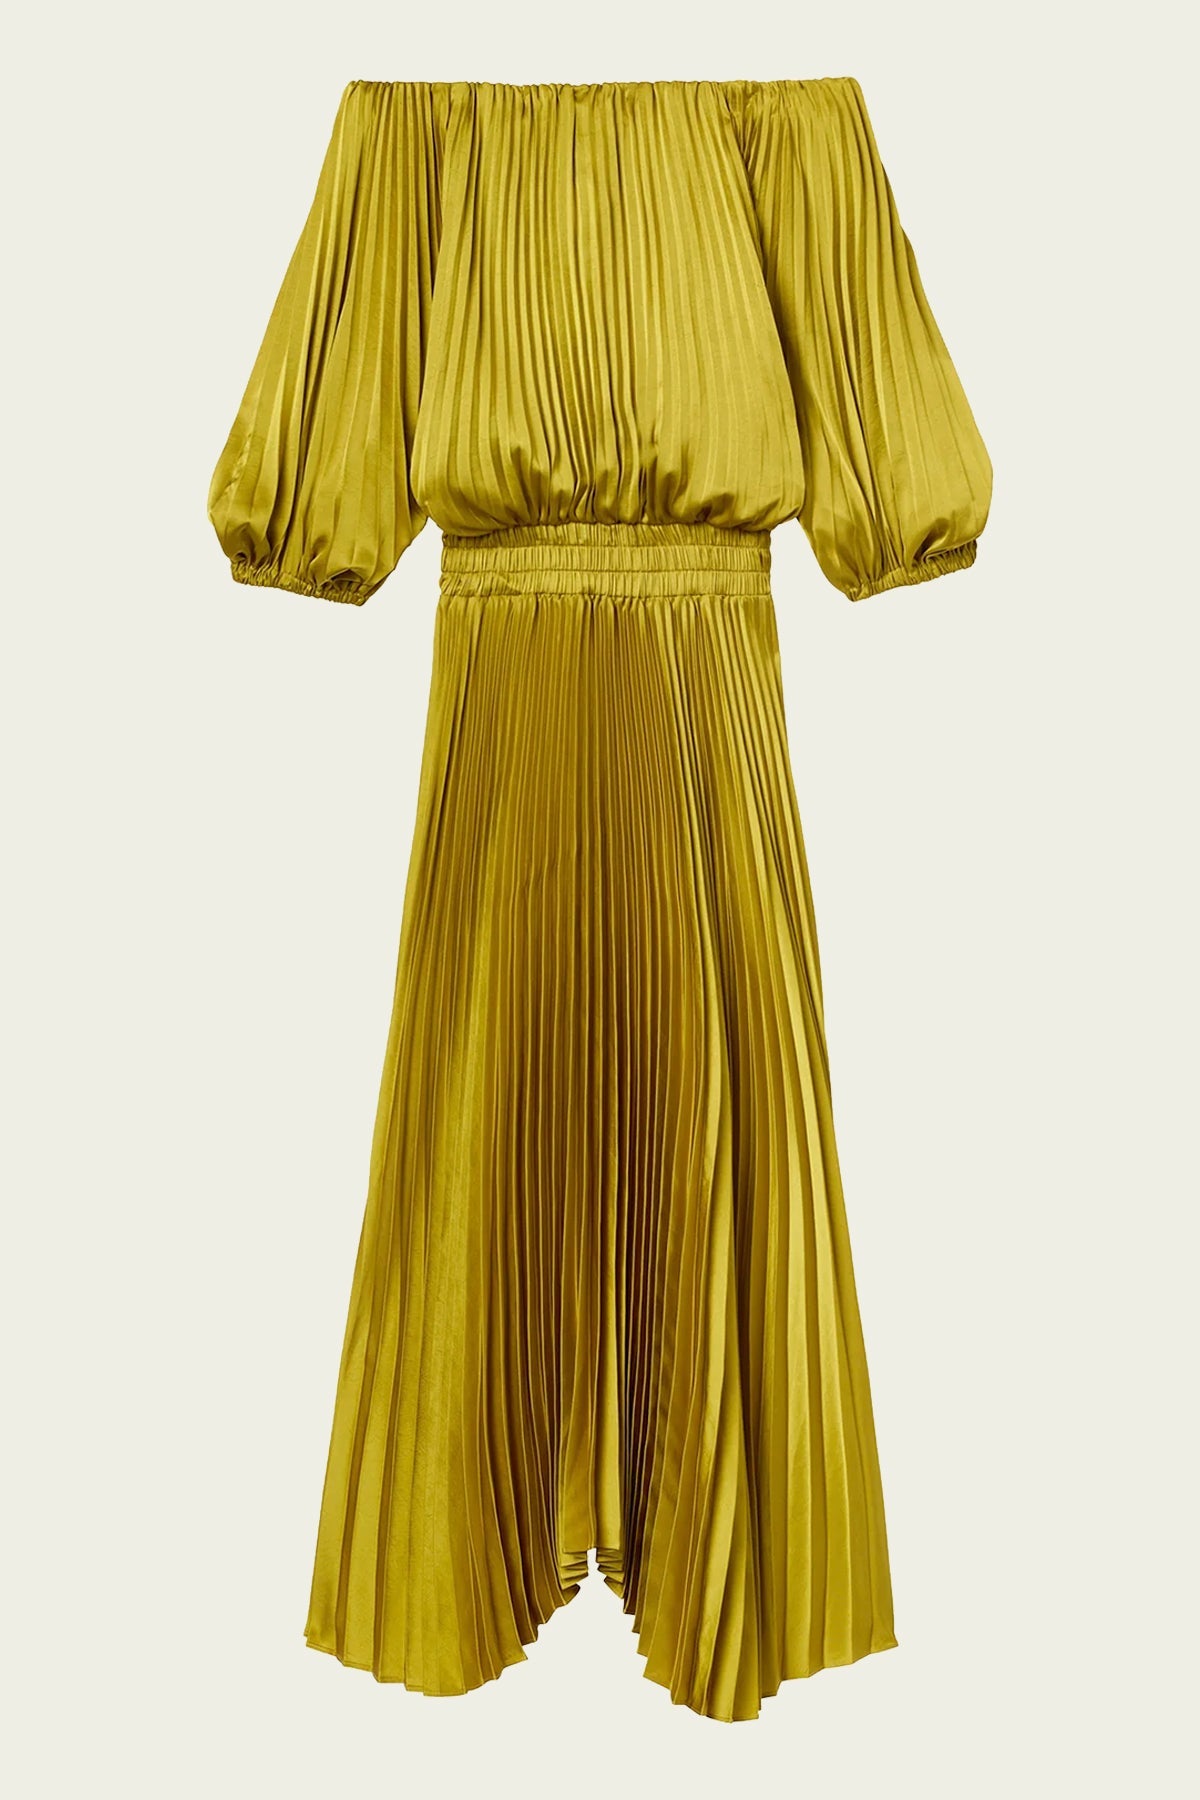 Sienna Satin Pleated Off Shoulder Dress in Cactus Bloom - shop-olivia.com